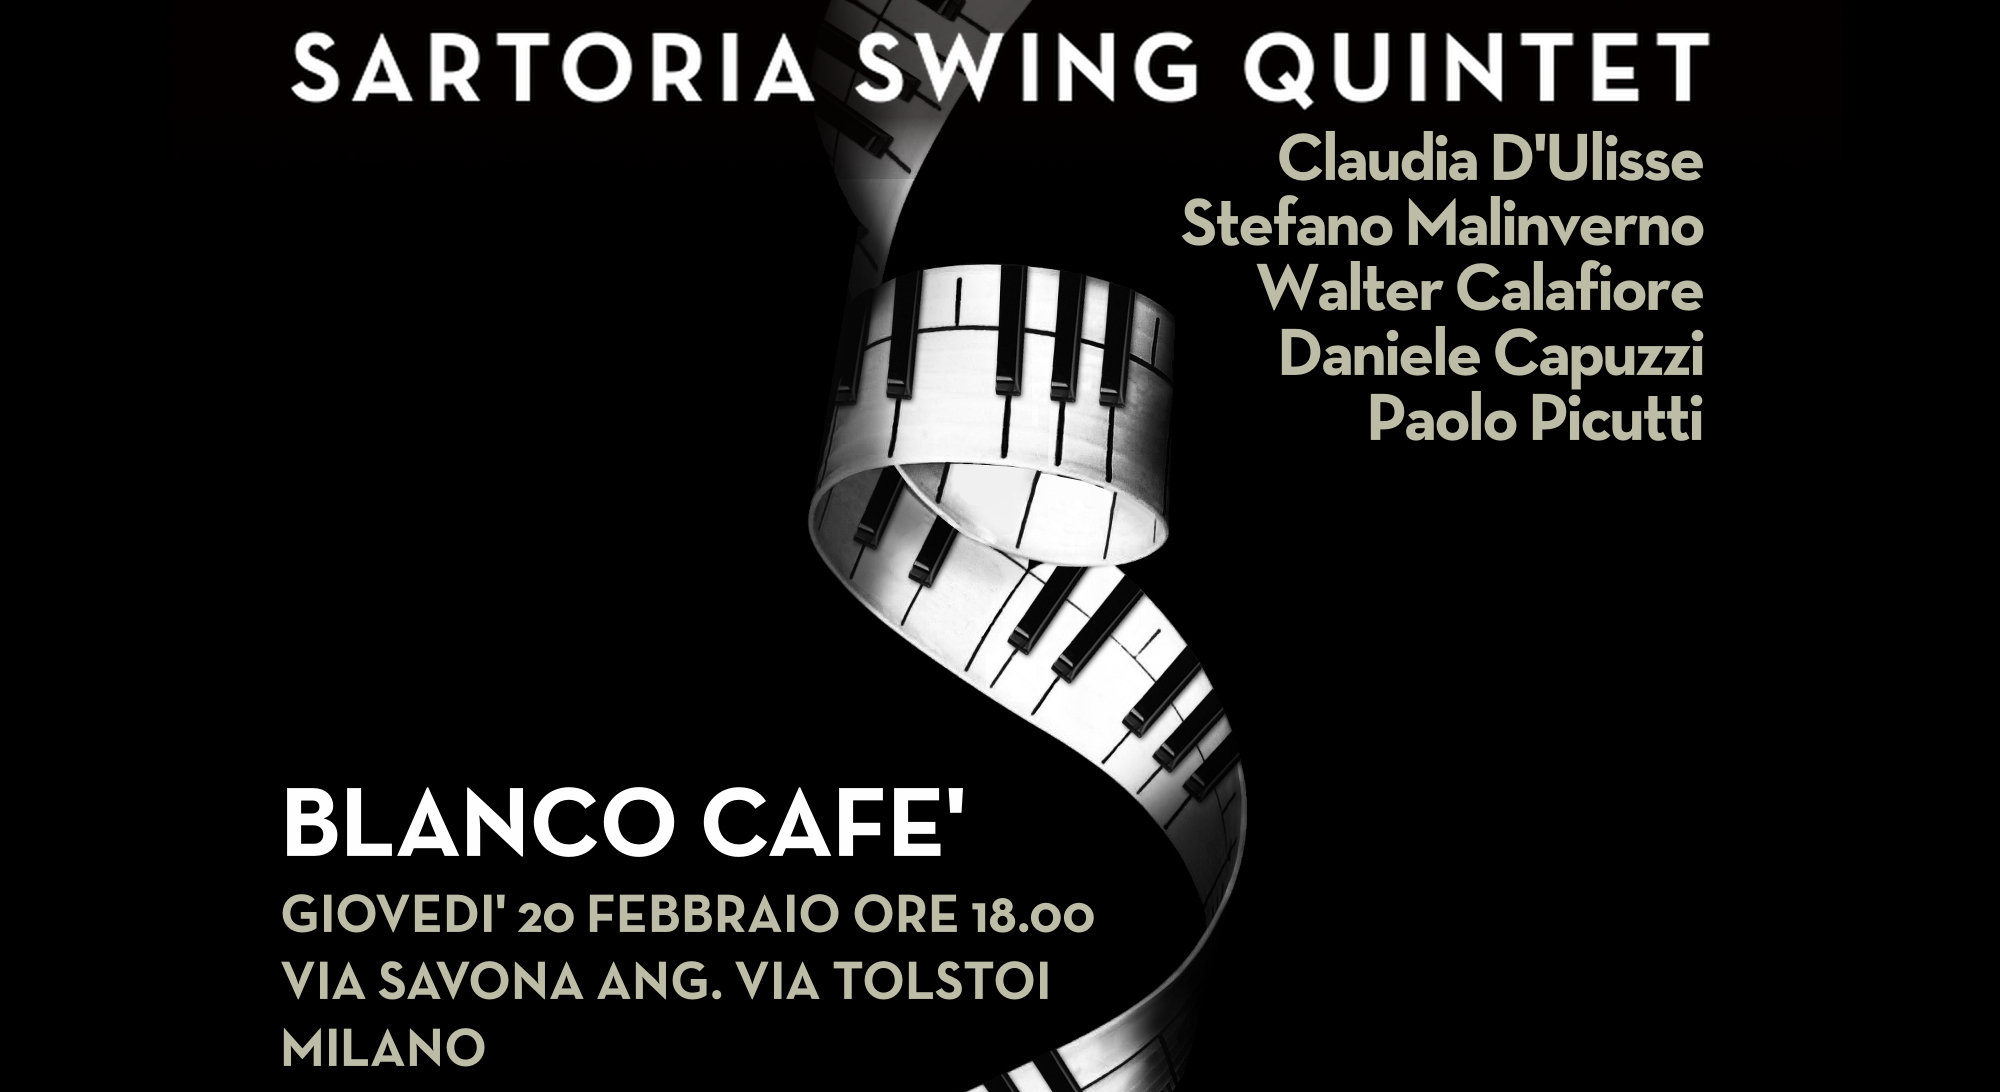 20 FEBBRAIO – Sartoria Swing Quintet al Blanco Cafè